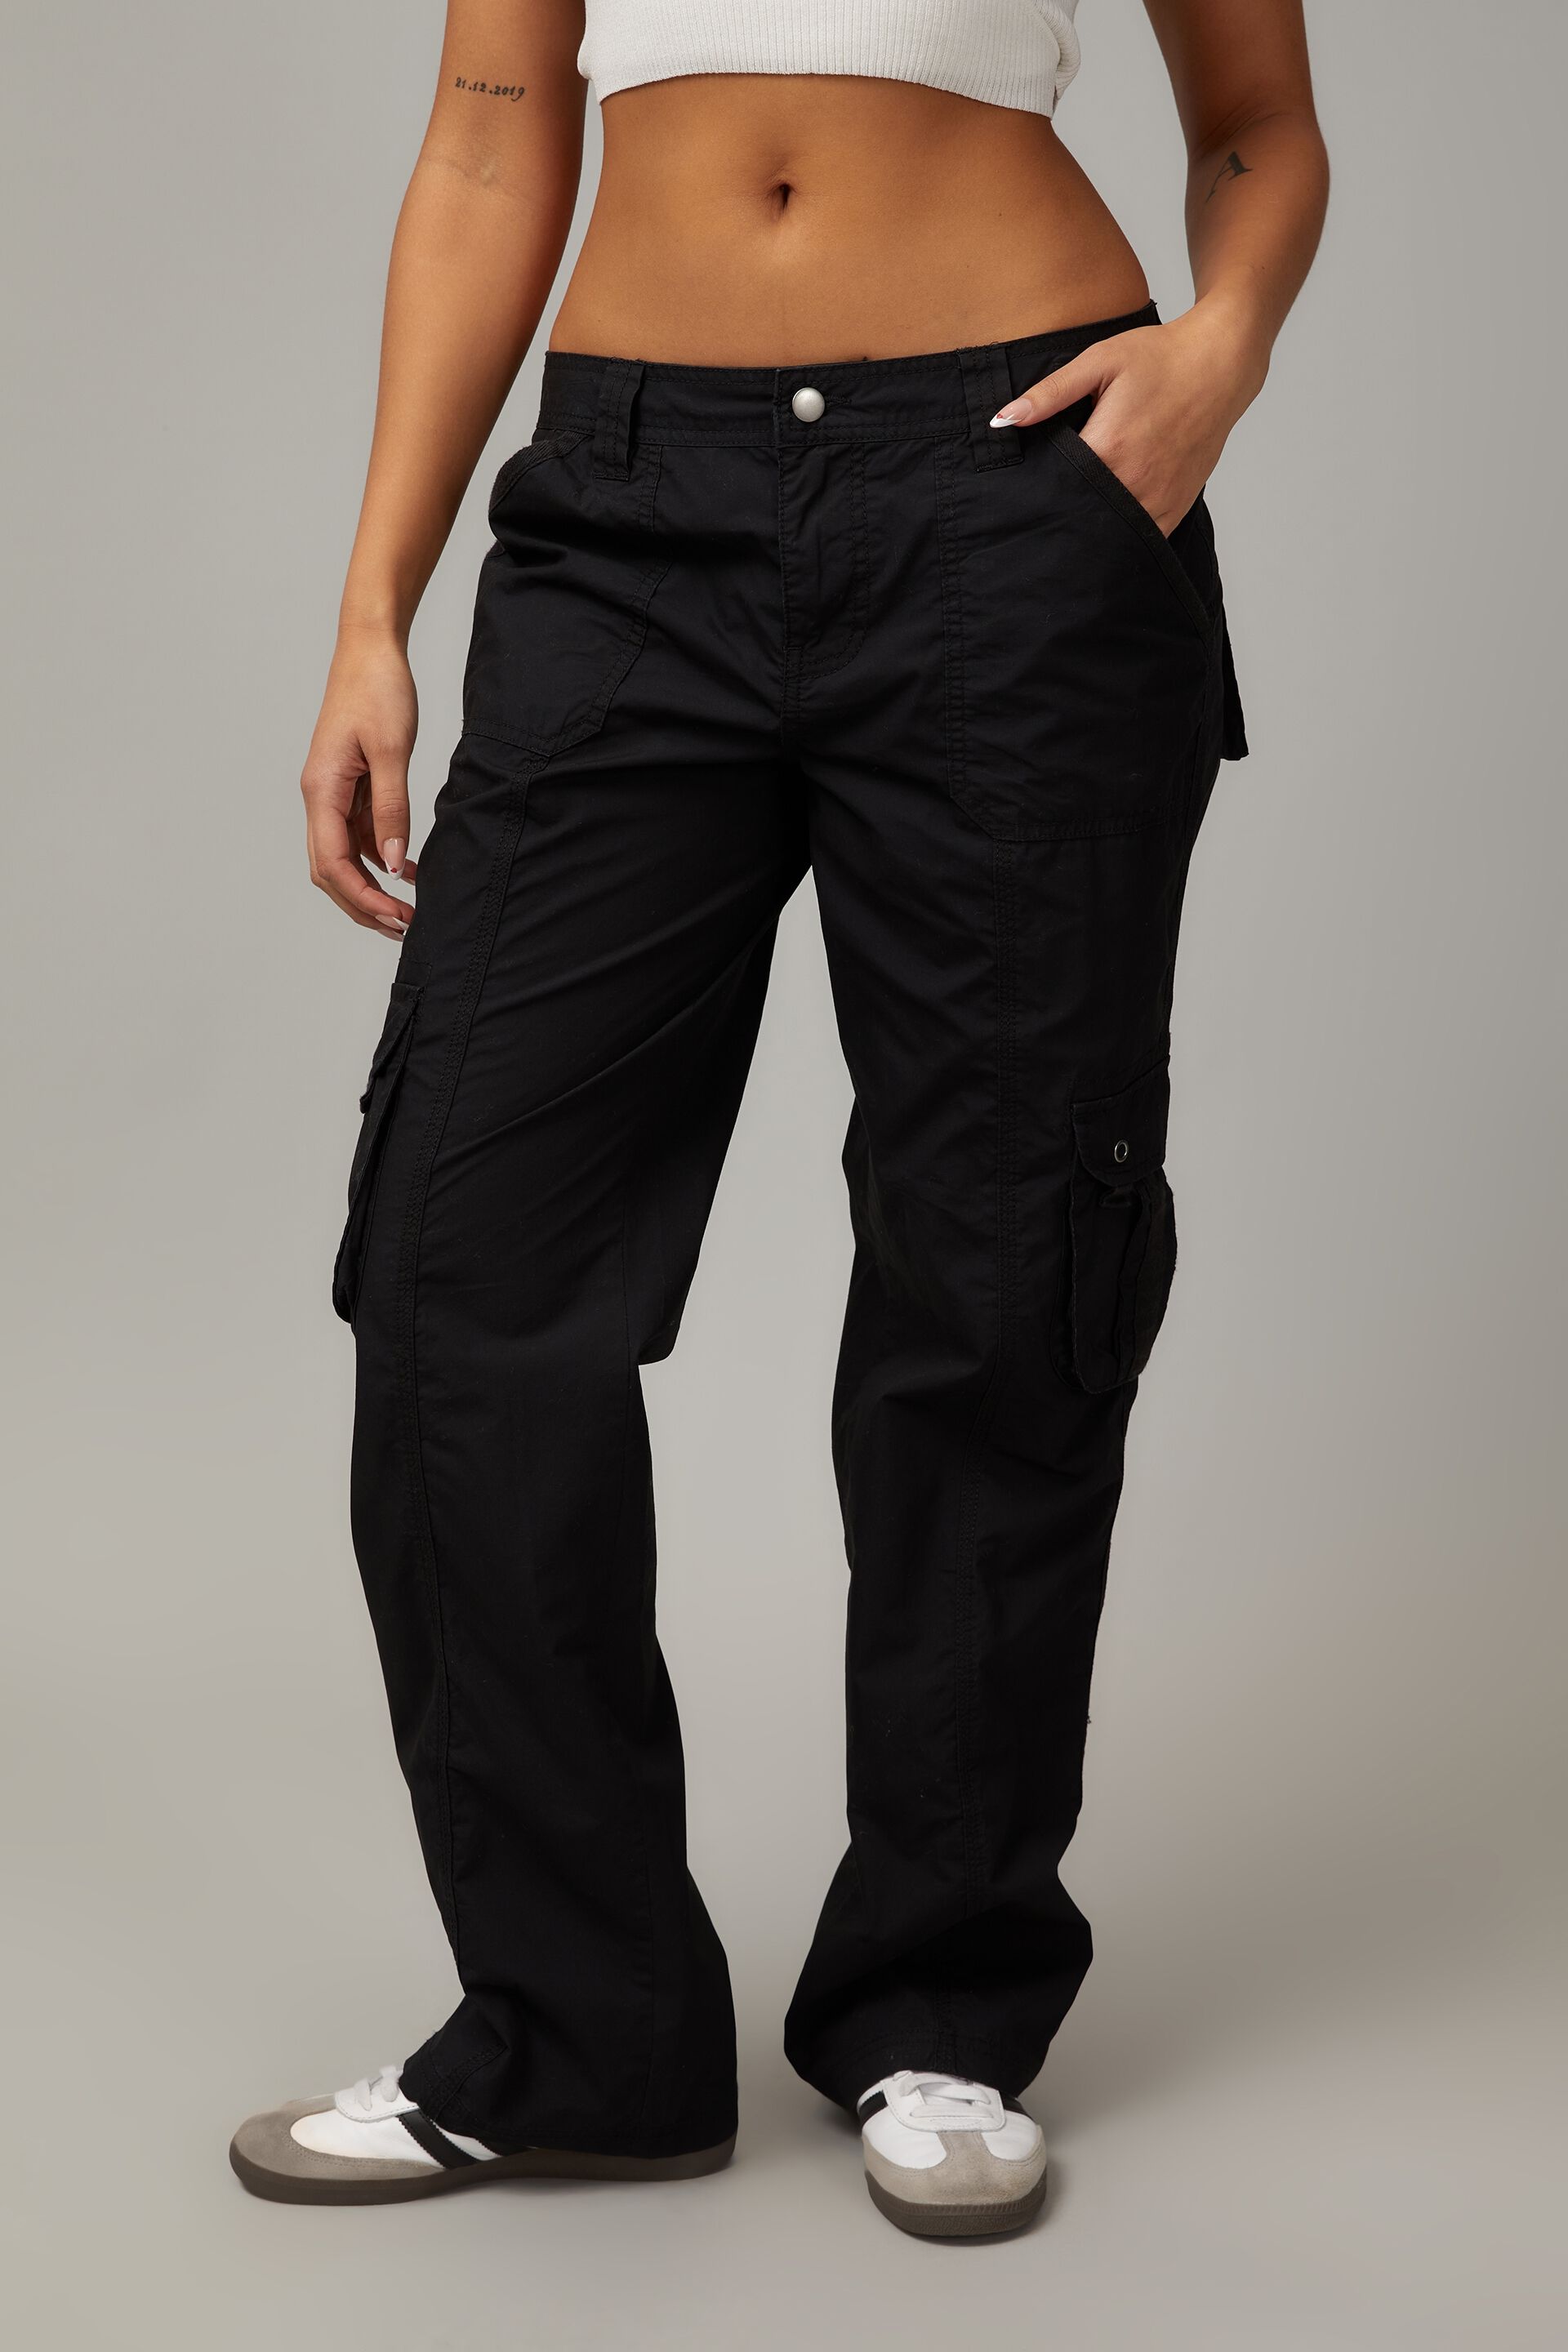 Shop Trendy Black Cargo Pants Mens Online at Great Price